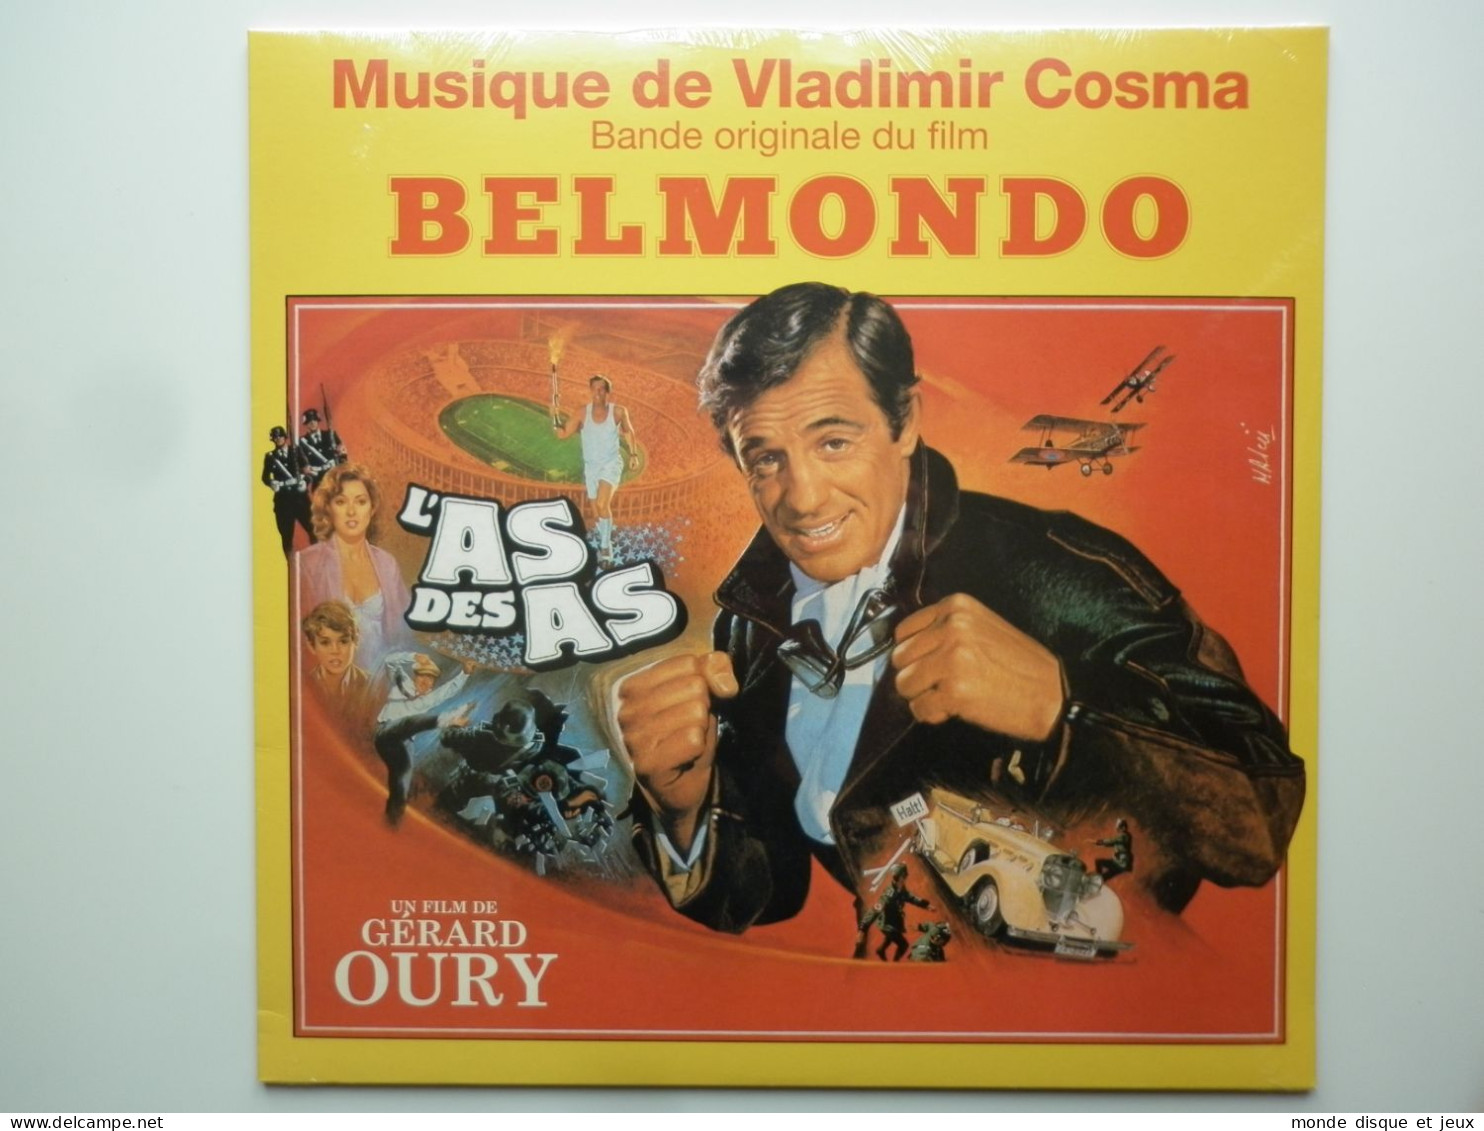 Vladimir Cosma Album 33Tours Vinyle Jean Paul Belmondo L'As Des As Bof - Other - French Music